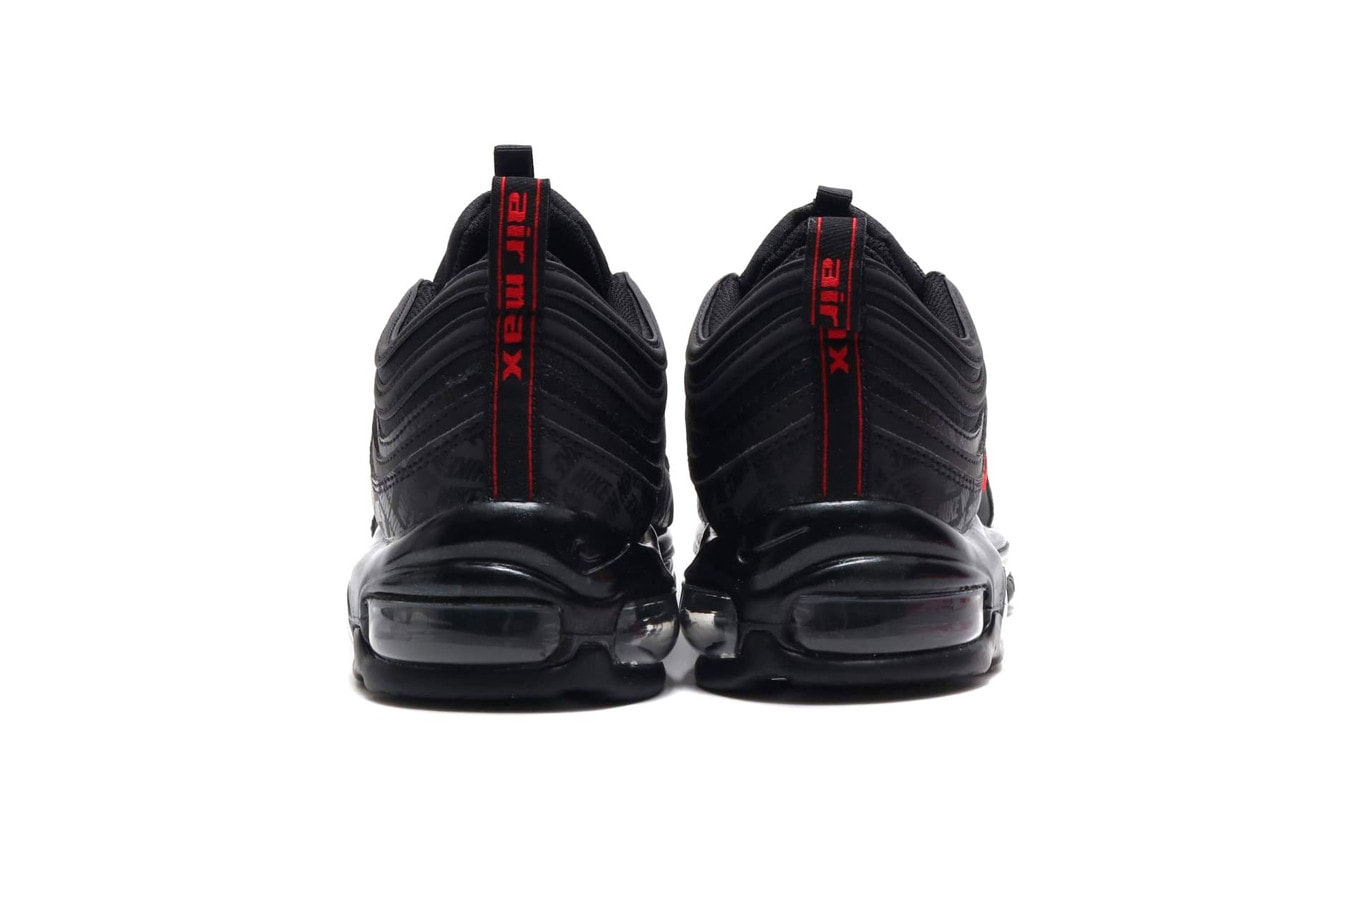 Nike Air Max 97 推出全新「Black/University Red」配色設計